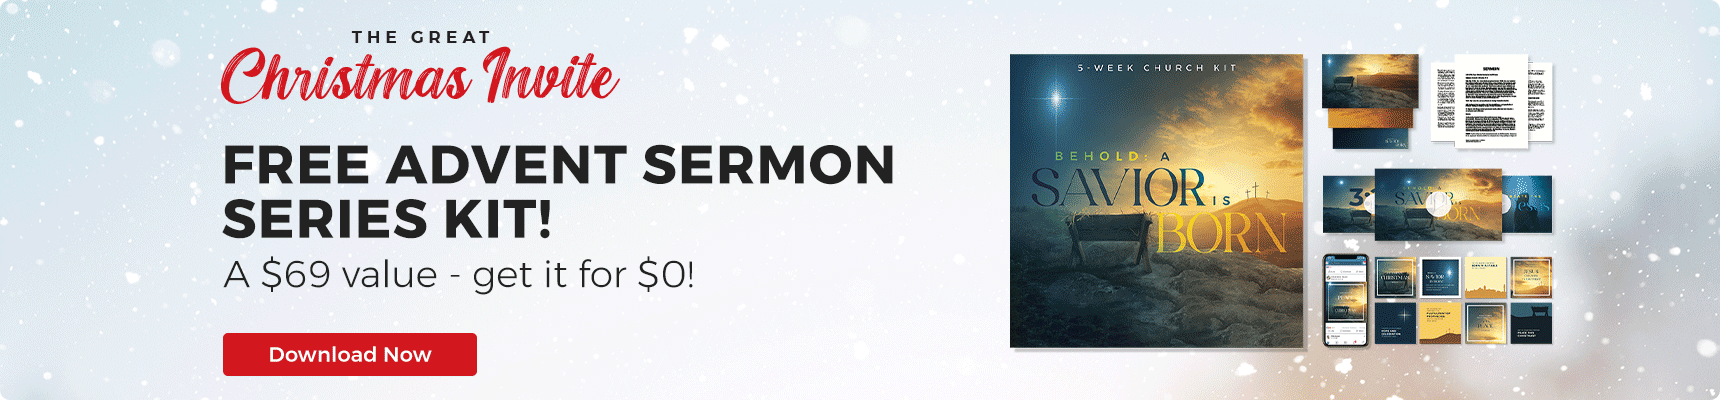 Free Sermon Series Church Kit for Christmas